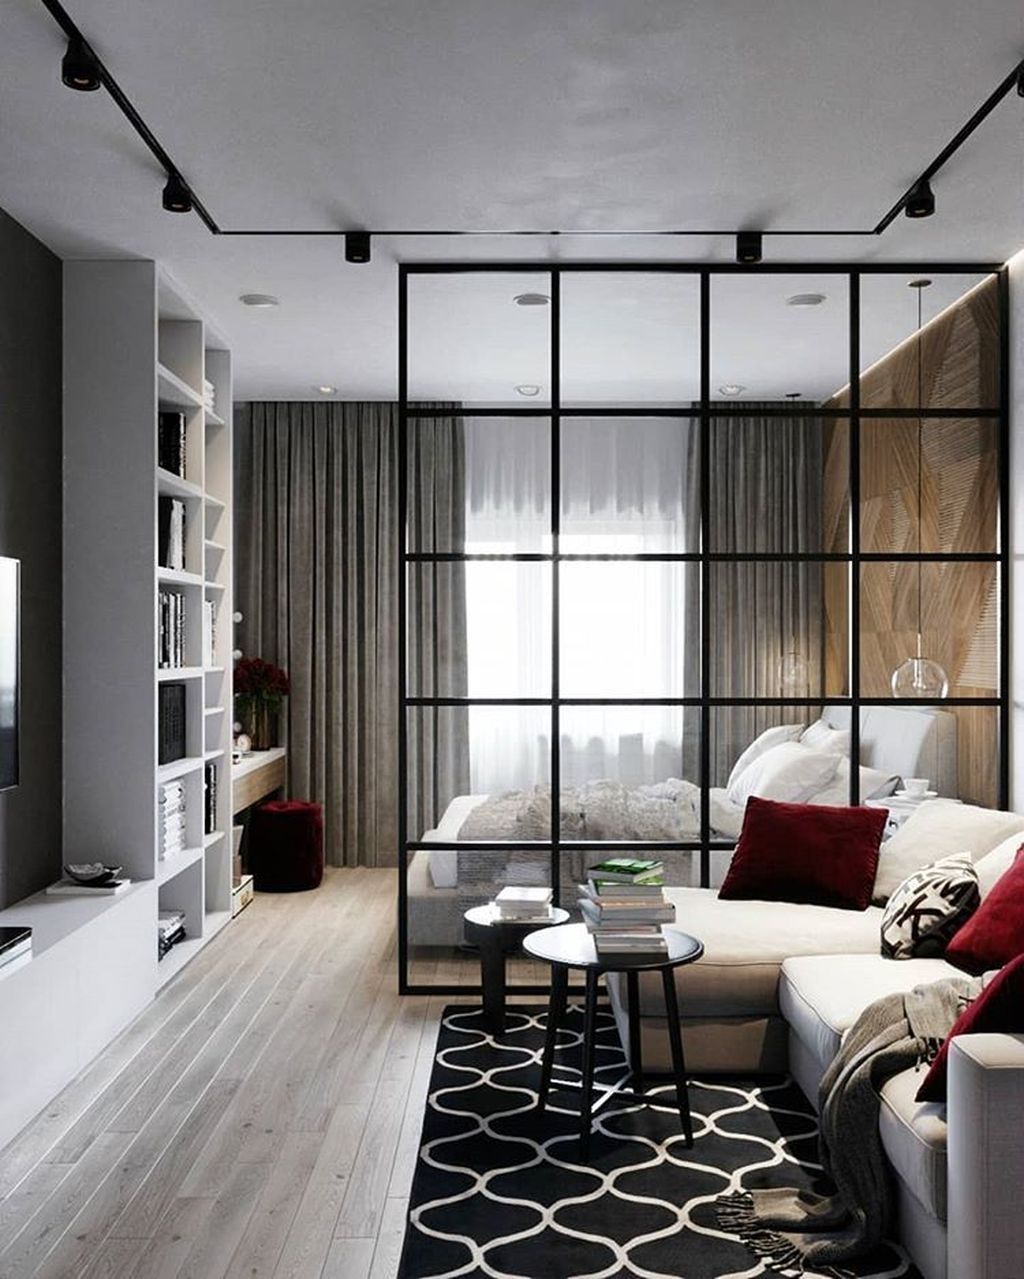 20+ Fabulous Studio Apartment Decor Ideas On A Budget -   19 room decor Living studio apartments ideas